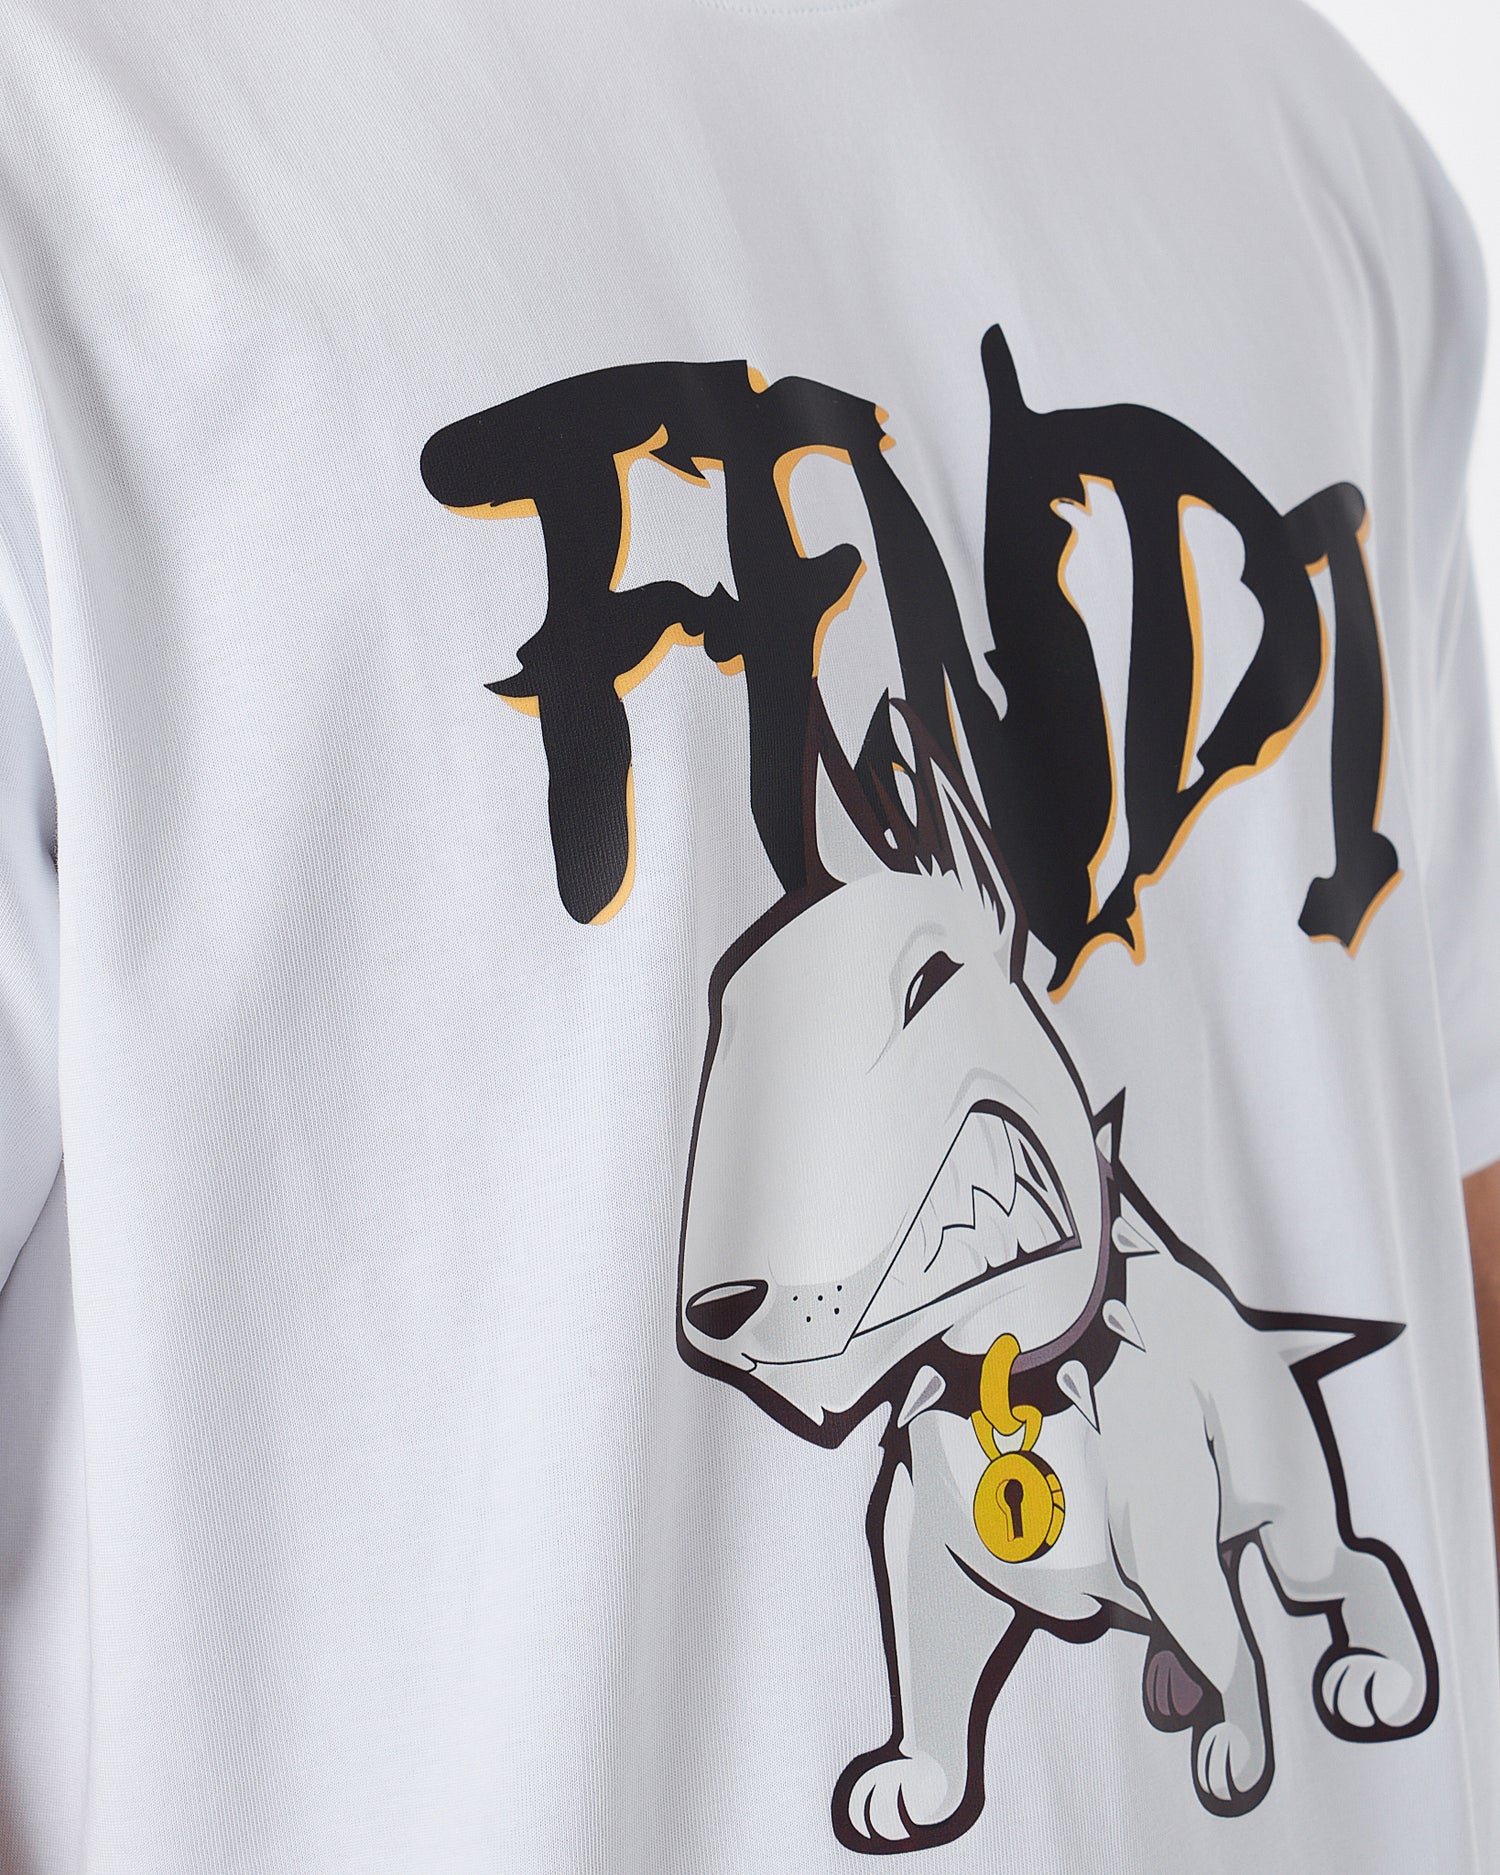 FEN Doggy Printed Men White T-Shirt 21.50